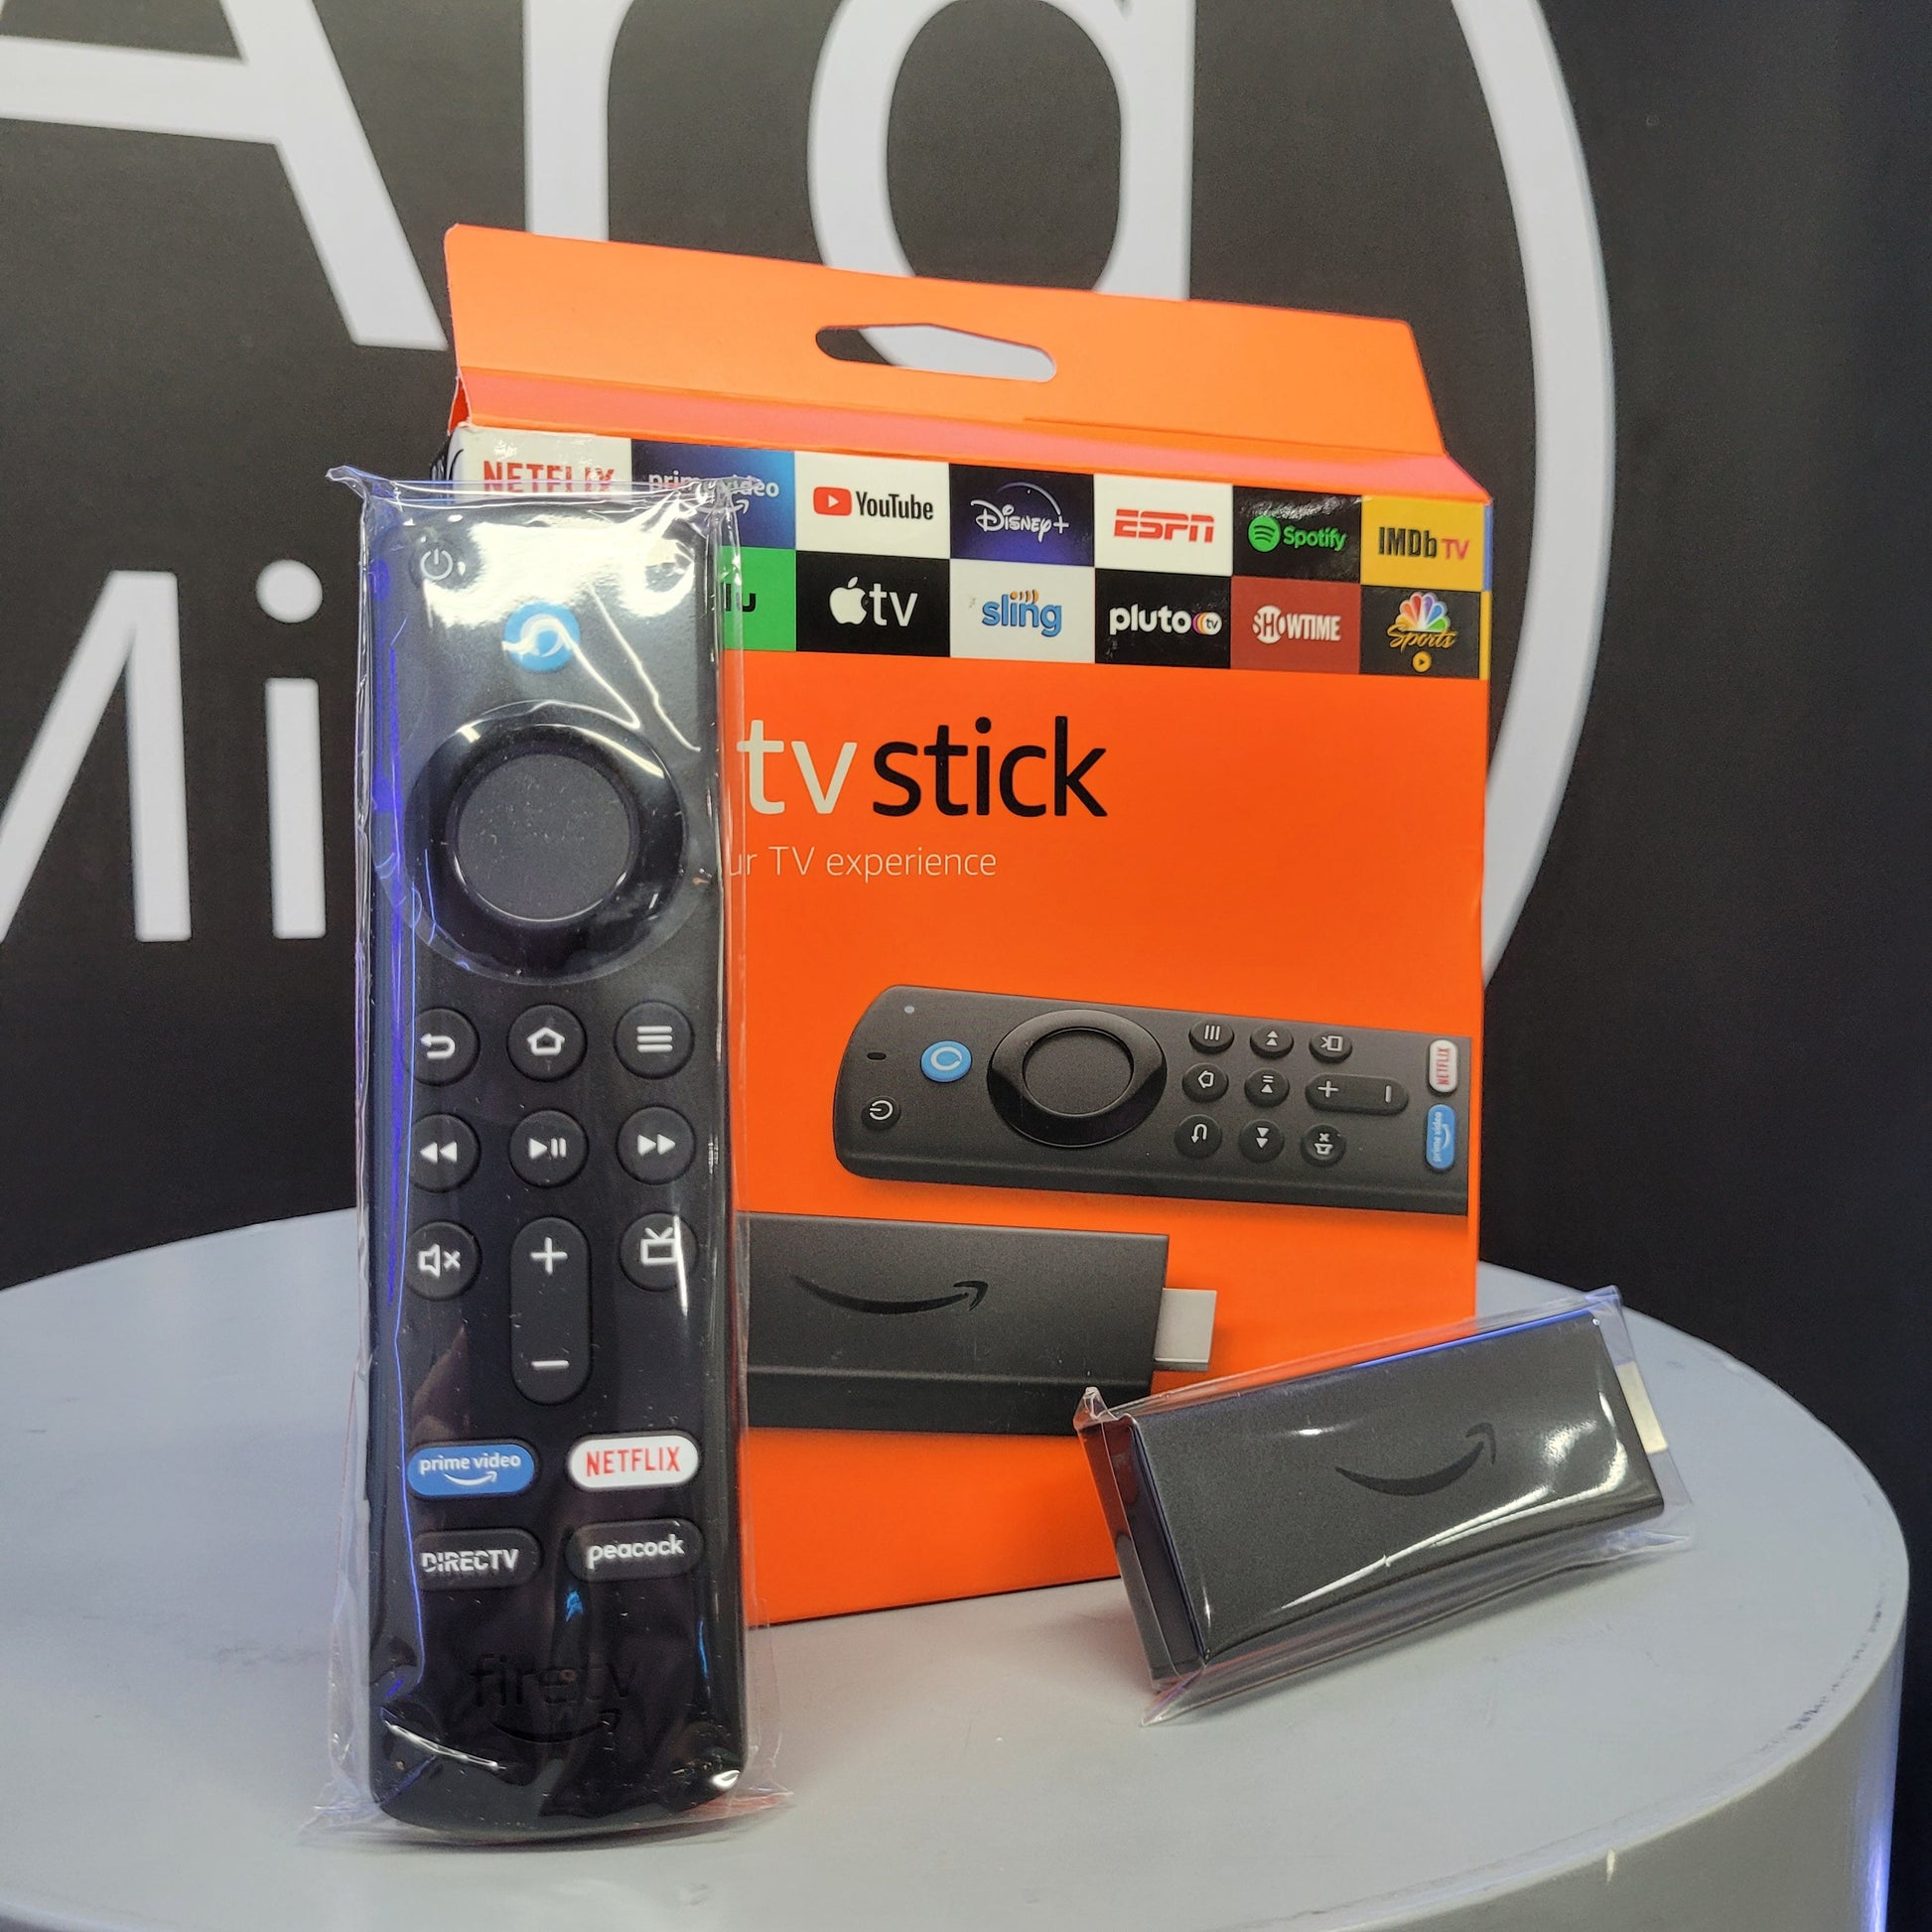 Fire Tv Stick Edición 2021 Dispositivo Streaming Hd Convierte tu Tv  en Smart de forma